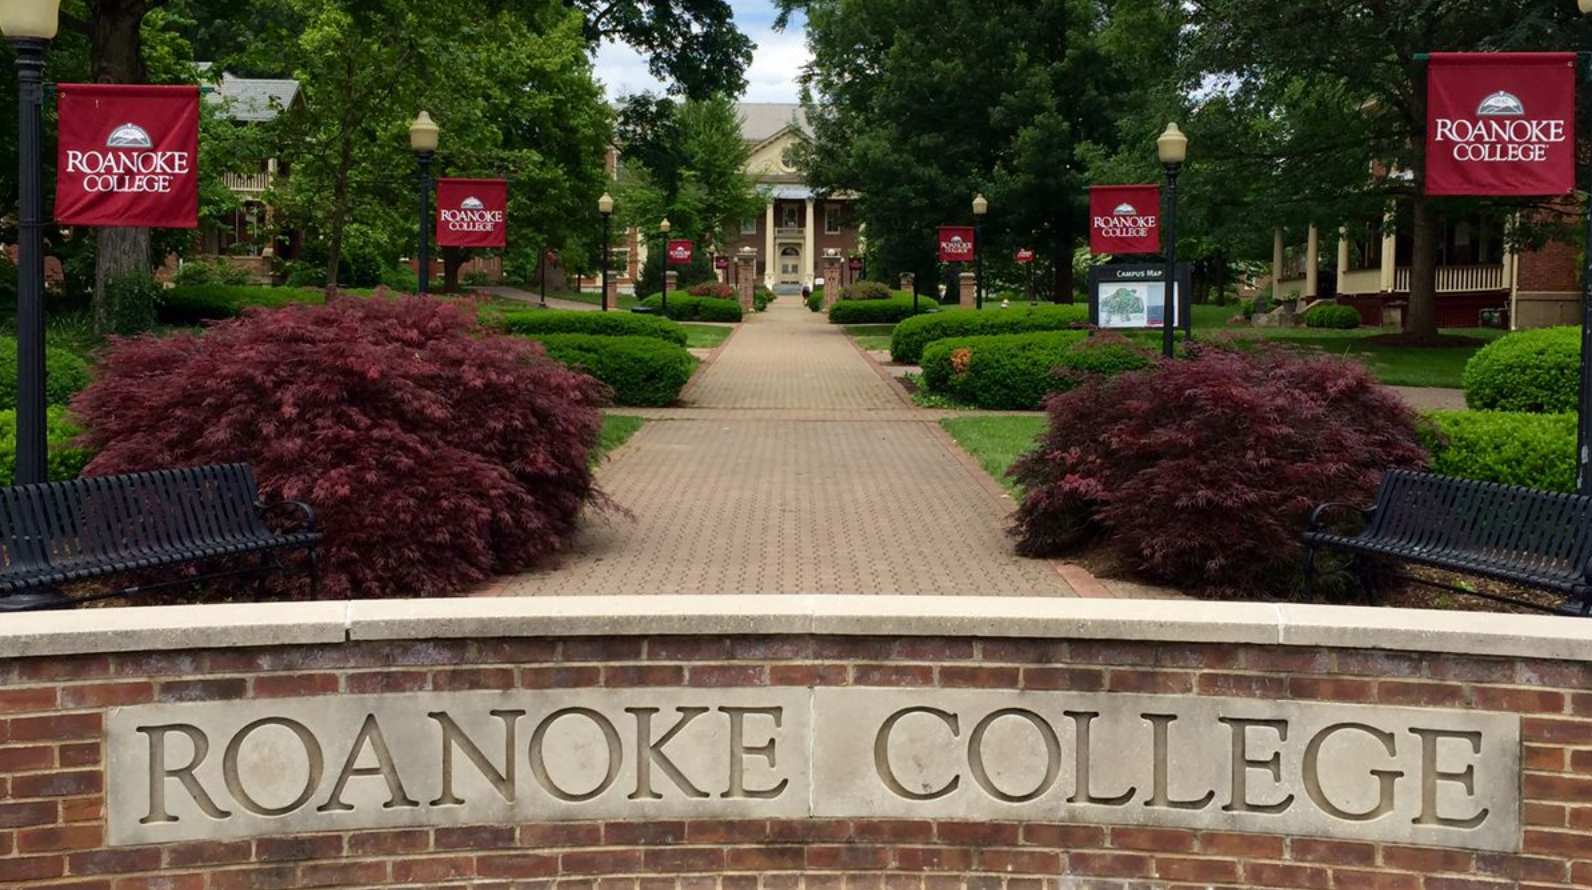 Roanoke college